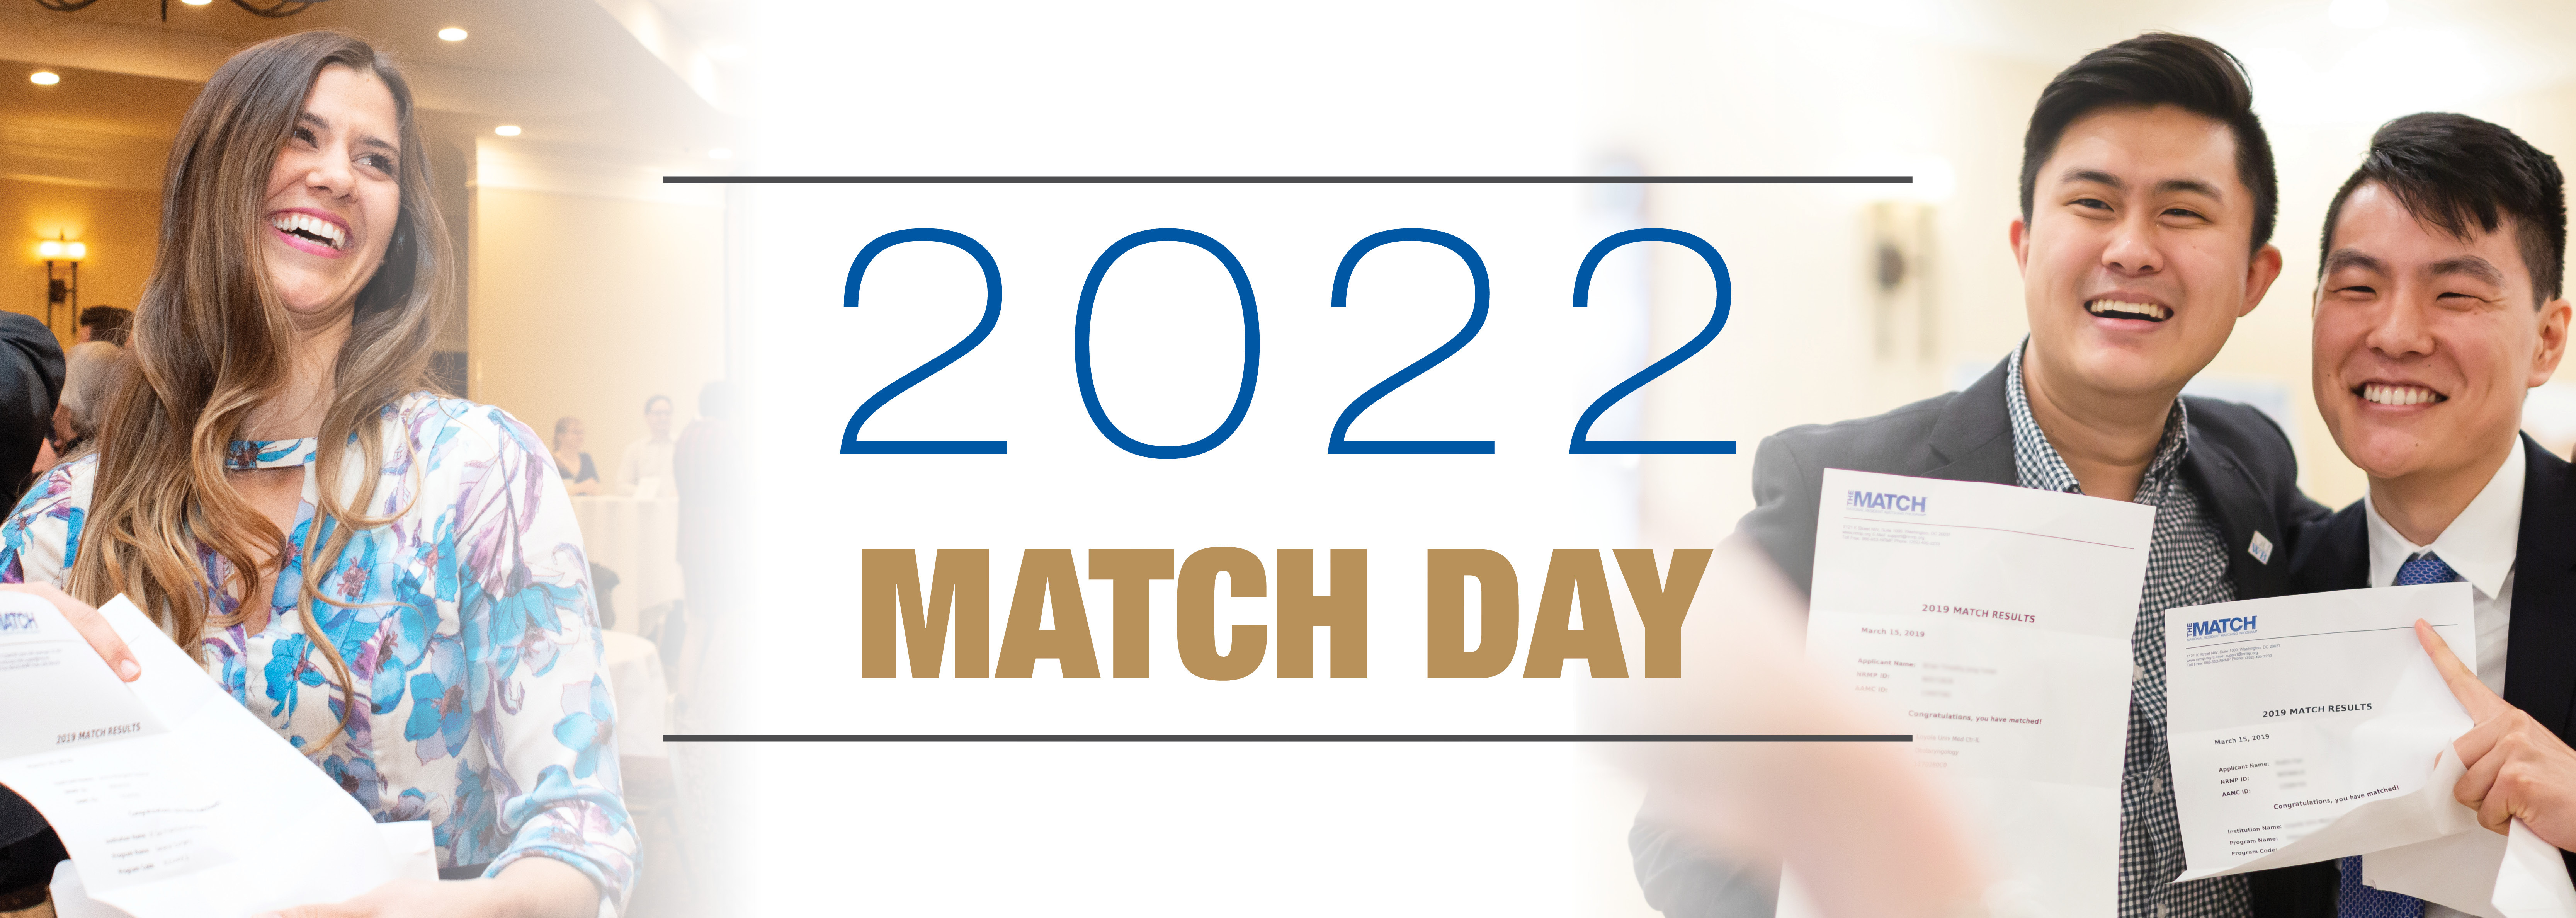 Match Day 2022 - Header